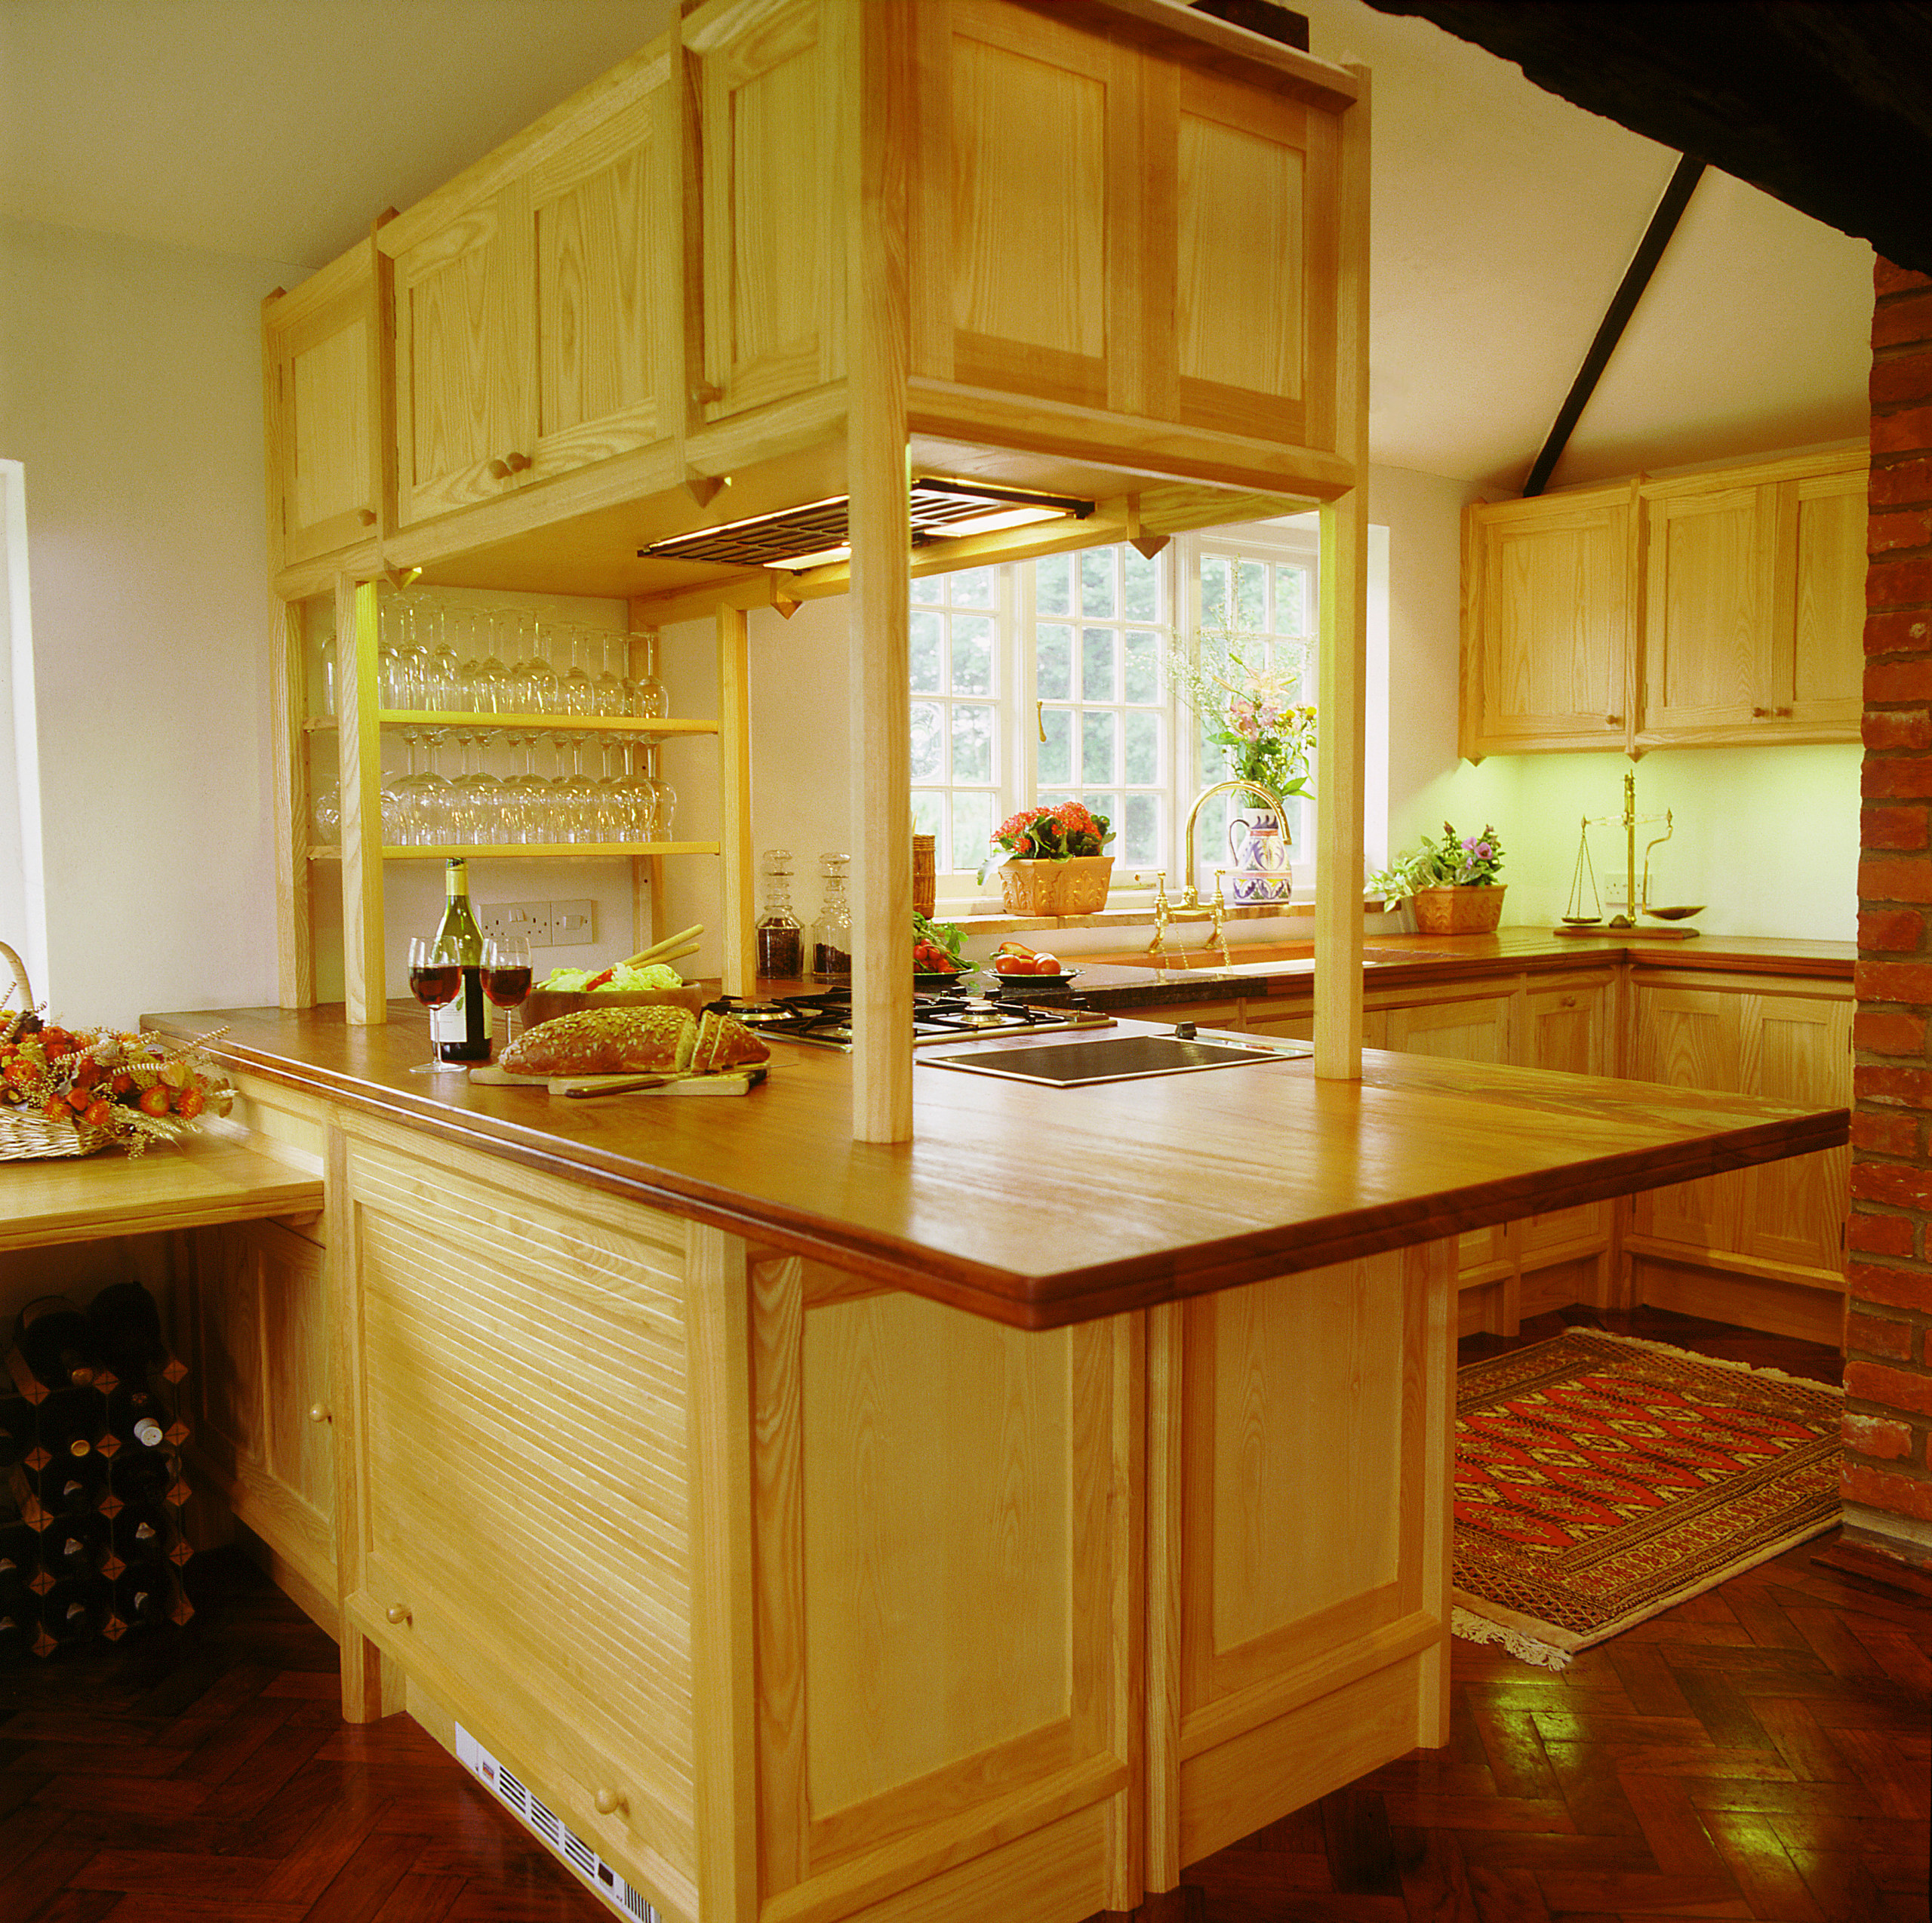 Maidenhead Ash Kitchen with an Ocagonal Framework